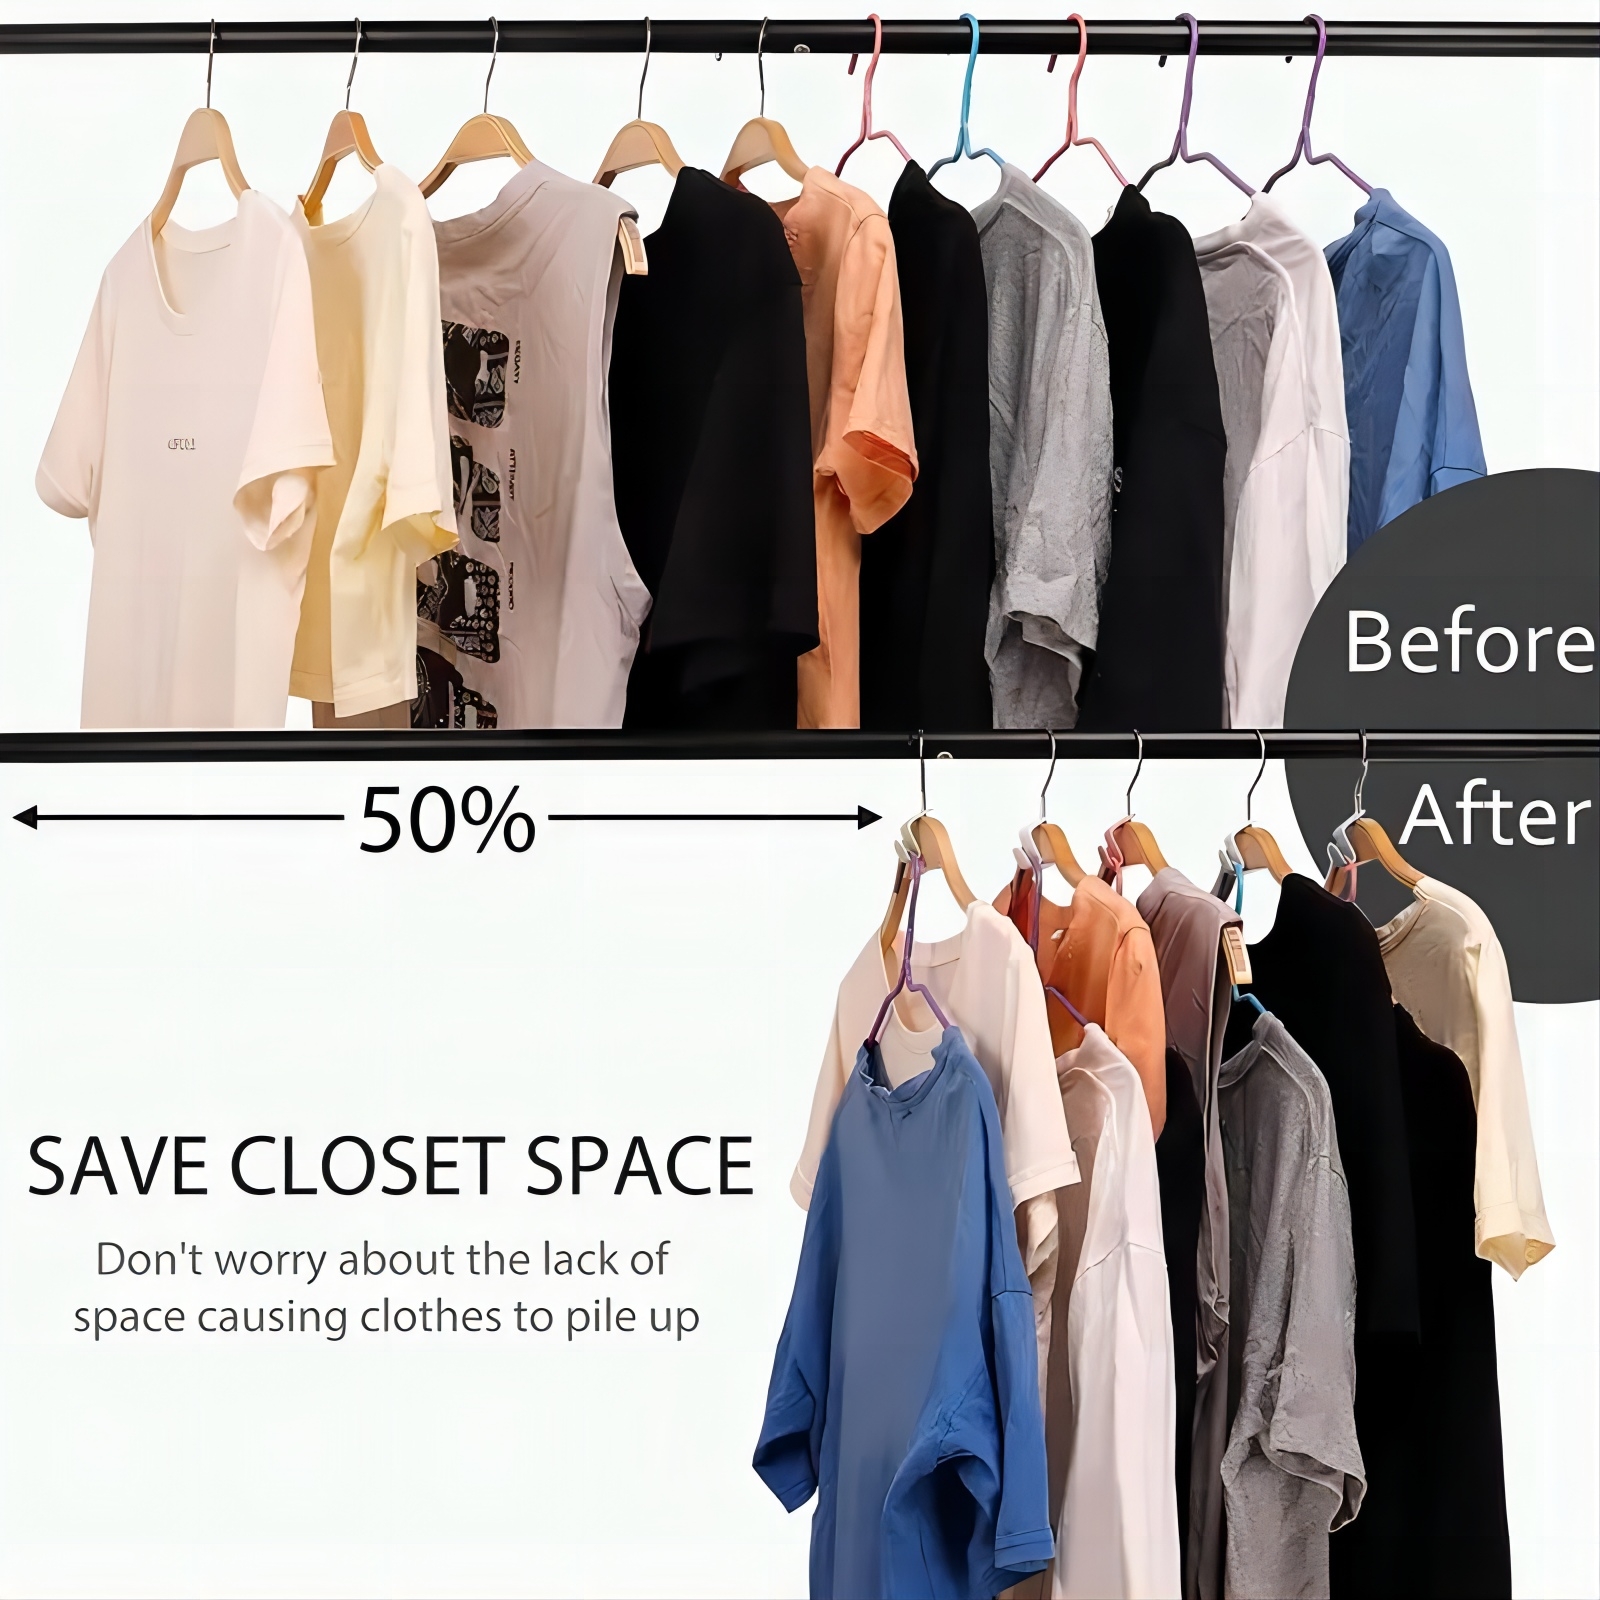 Clothes Hanger Connector Hooks, Hangers Space Saving, Closet Space Savers,  Closet Hanger Organizer, 60 pcs, Gift